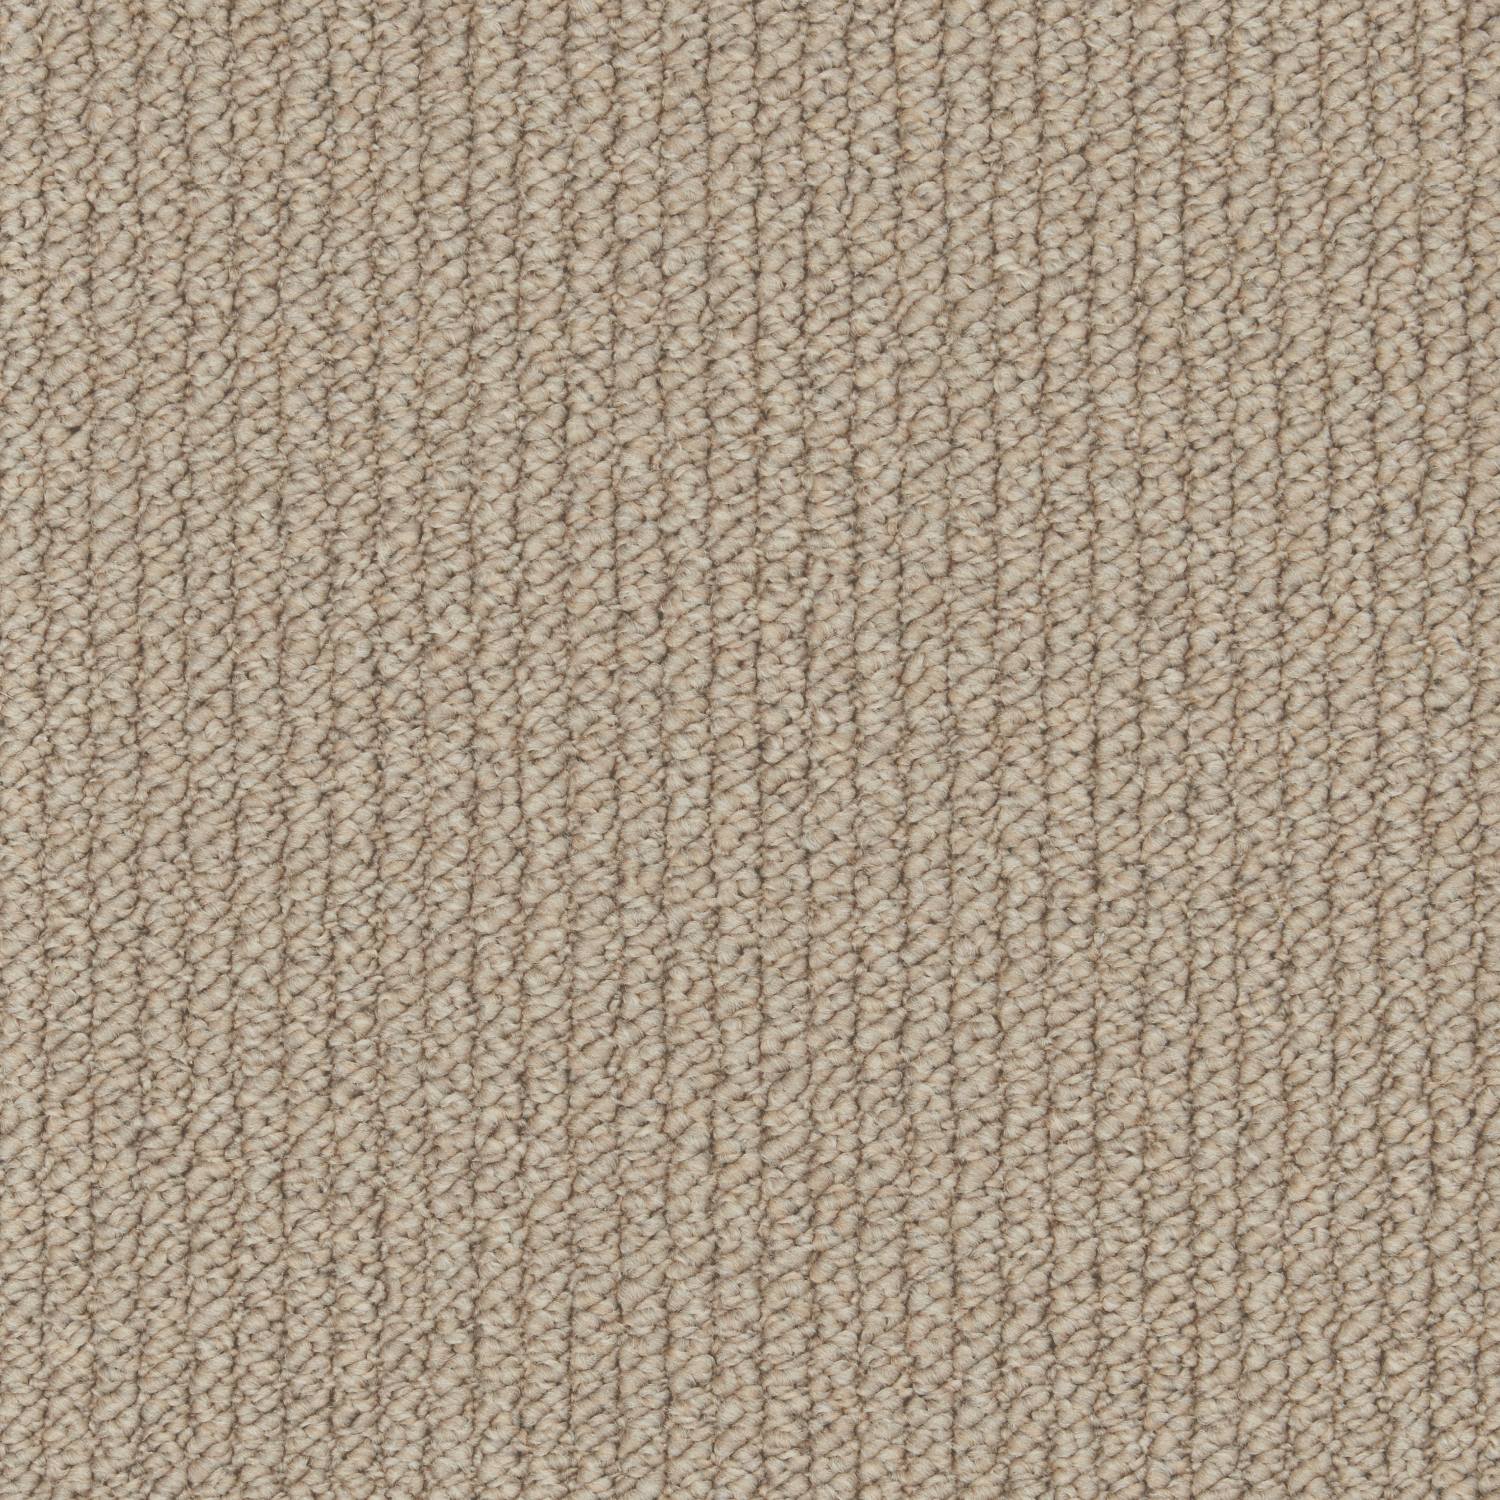 Rural Textures Loop Carpet - Gentle Fawn Ribbed